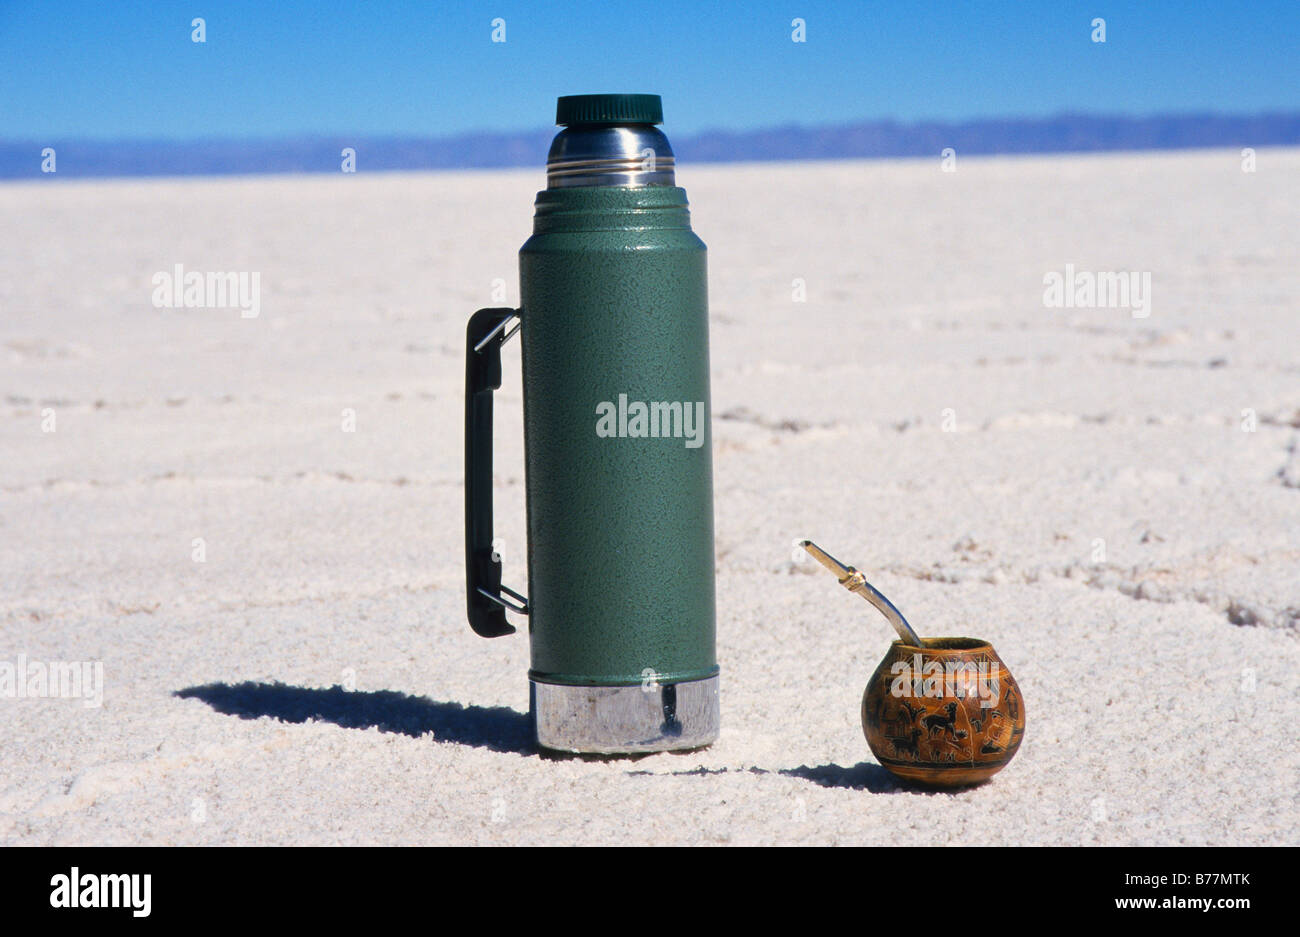 https://c8.alamy.com/comp/B77MTK/mate-calabash-gourd-with-thermos-flask-on-the-salt-lake-salinas-grandes-B77MTK.jpg